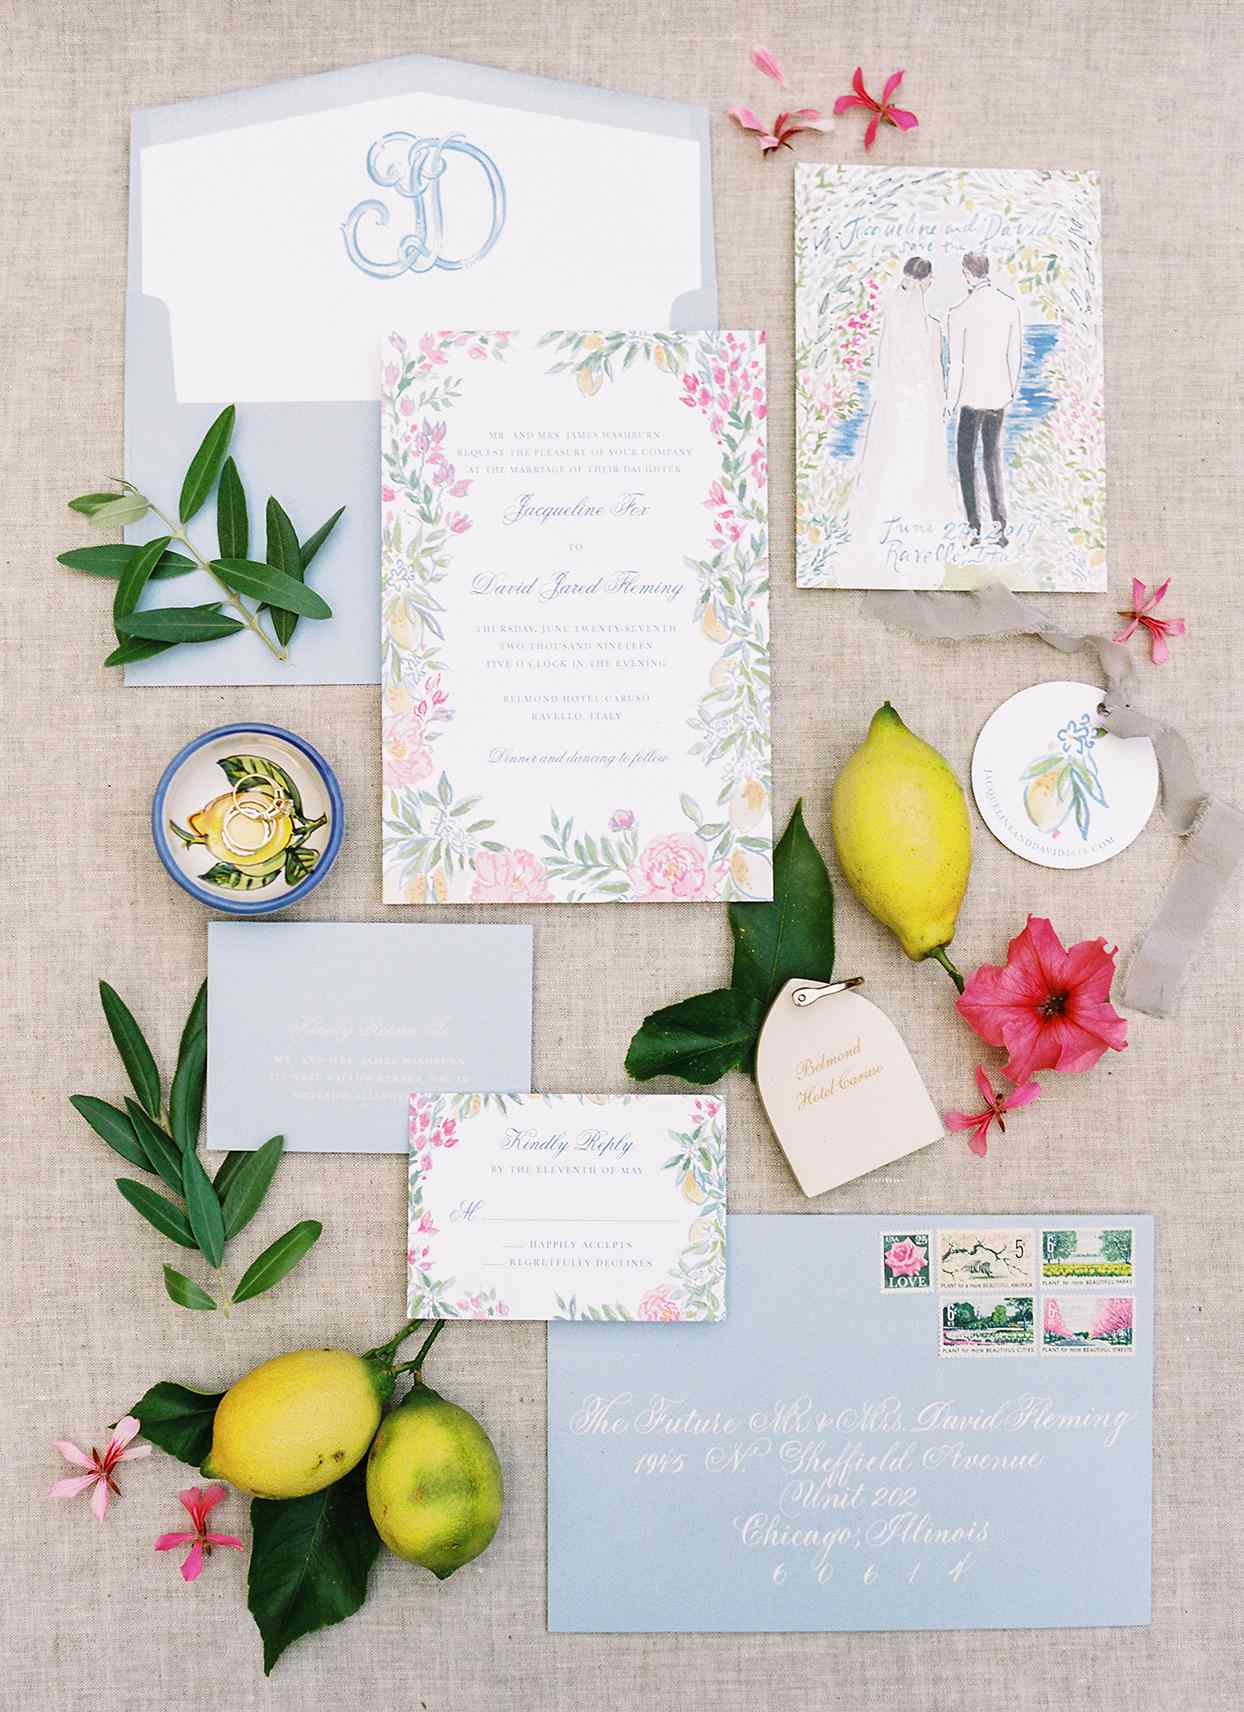 jacqueline david wedding blue pink and white invitations